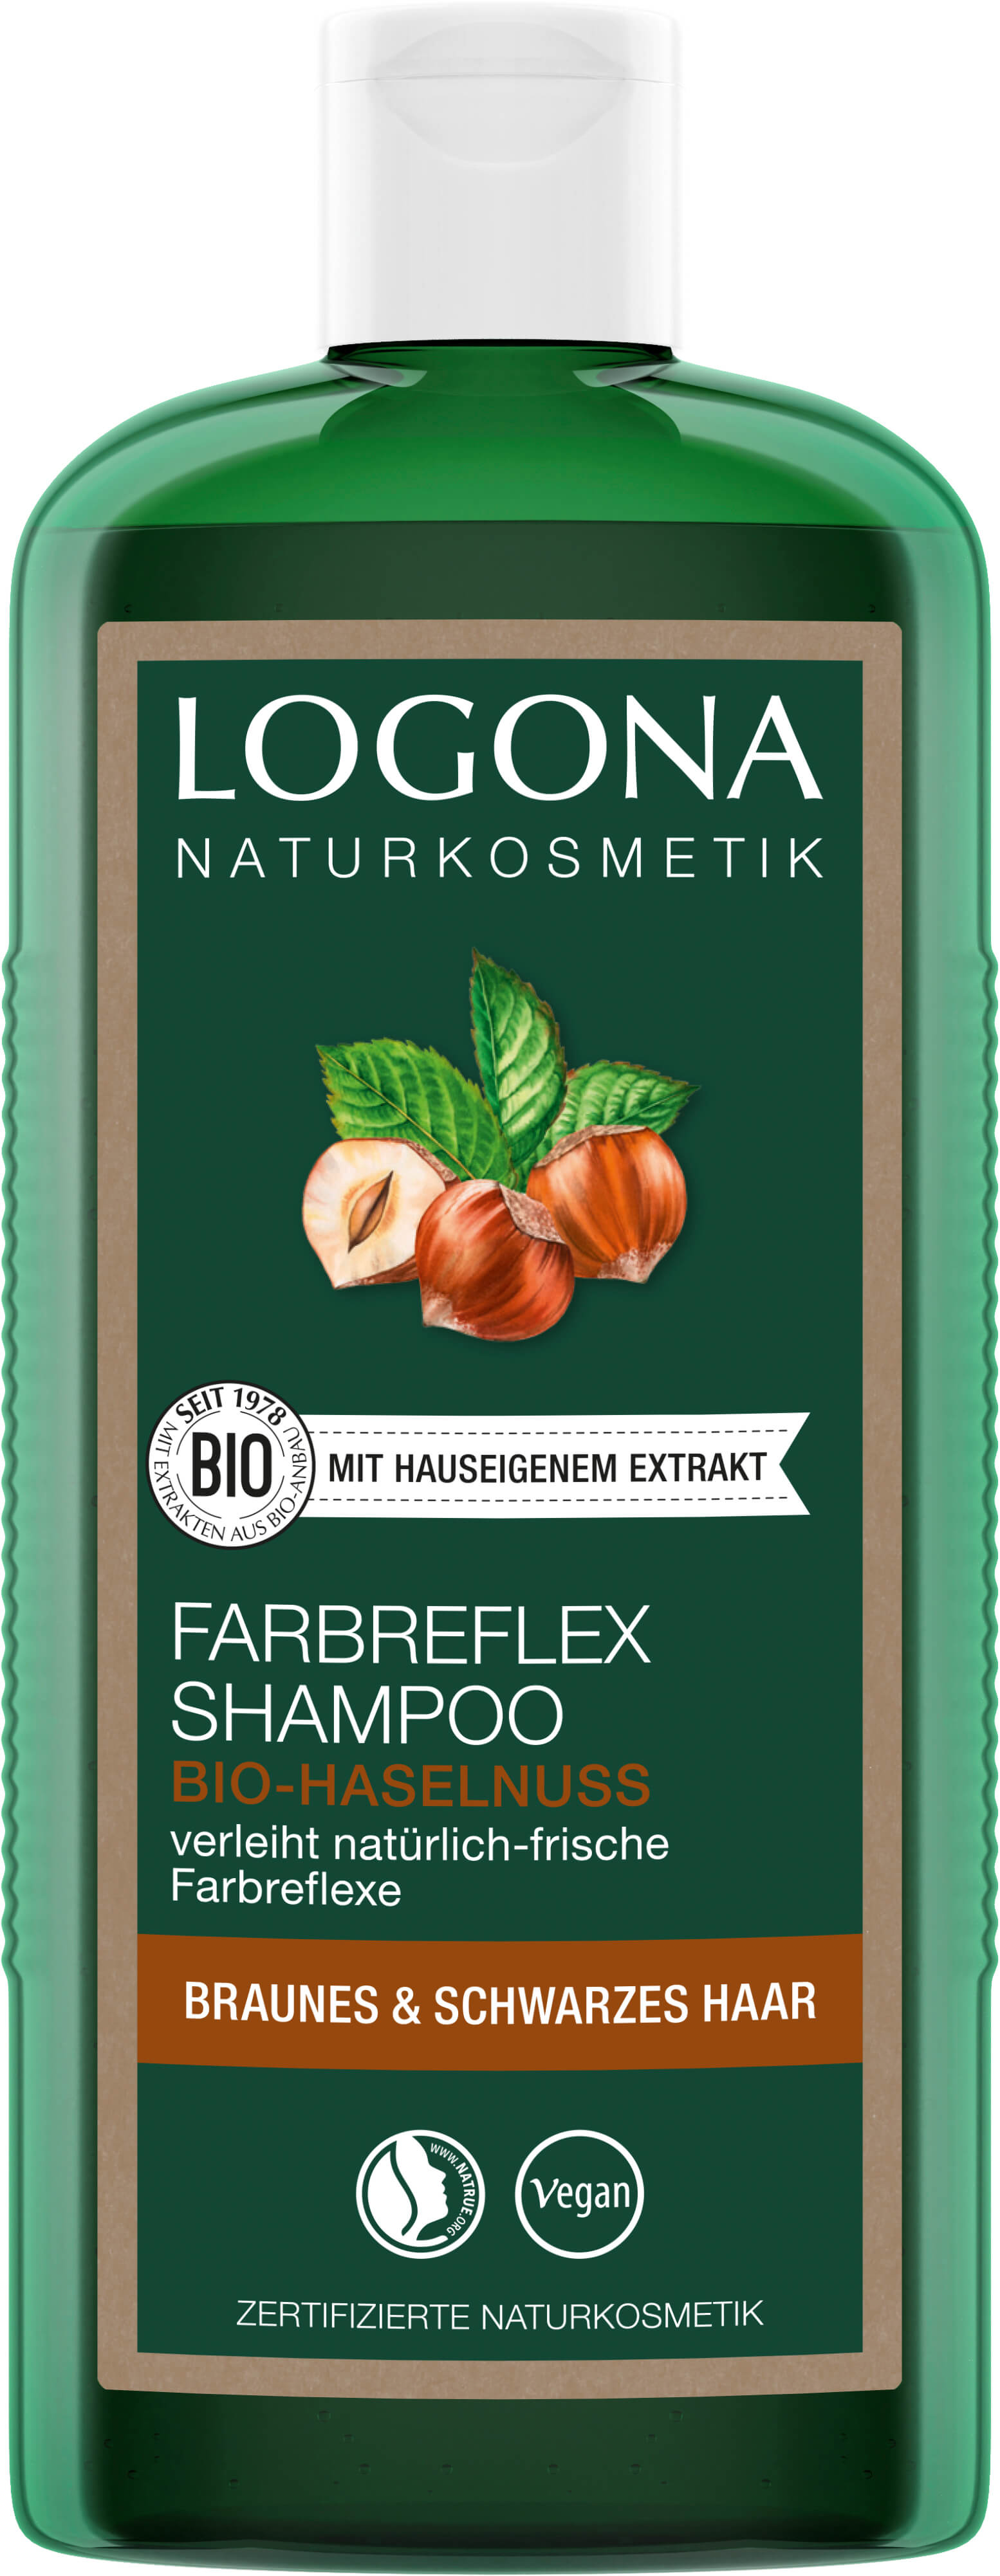 Farbreflex Shampoo Naturkosmetik Bio-Haselnuss | Braun-Schwarz LOGONA